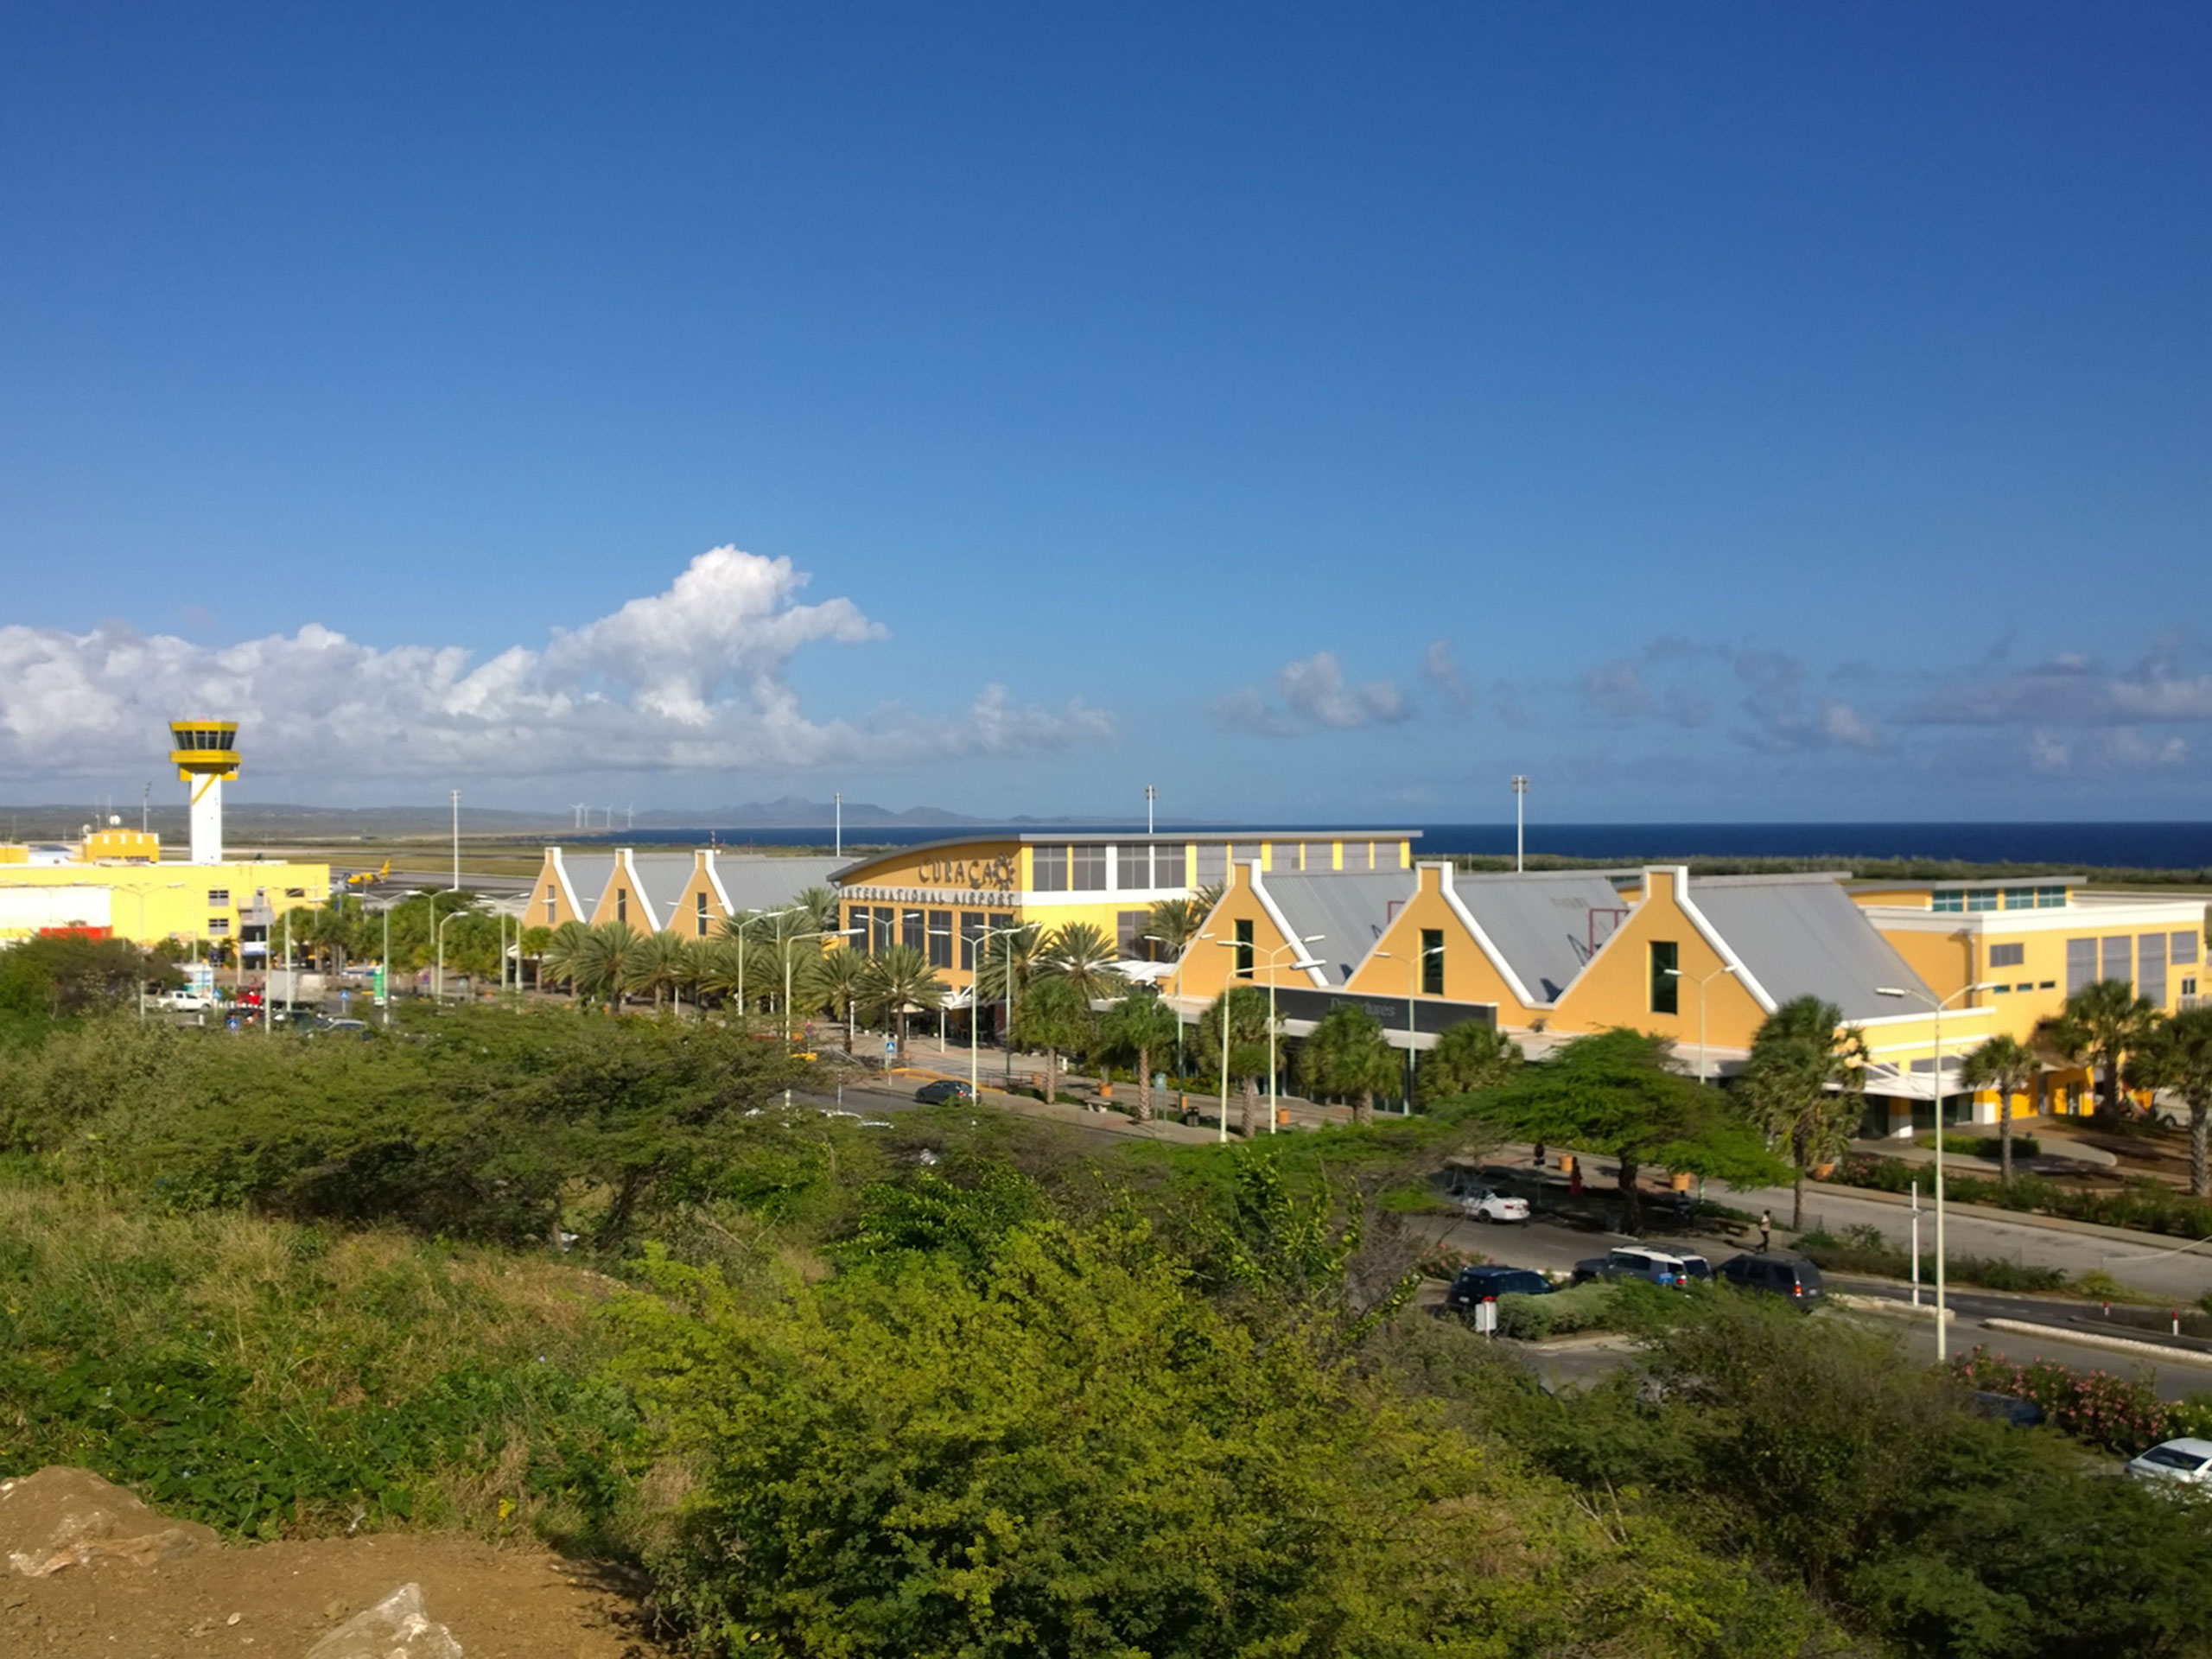 Hato International Airport in Curaçao